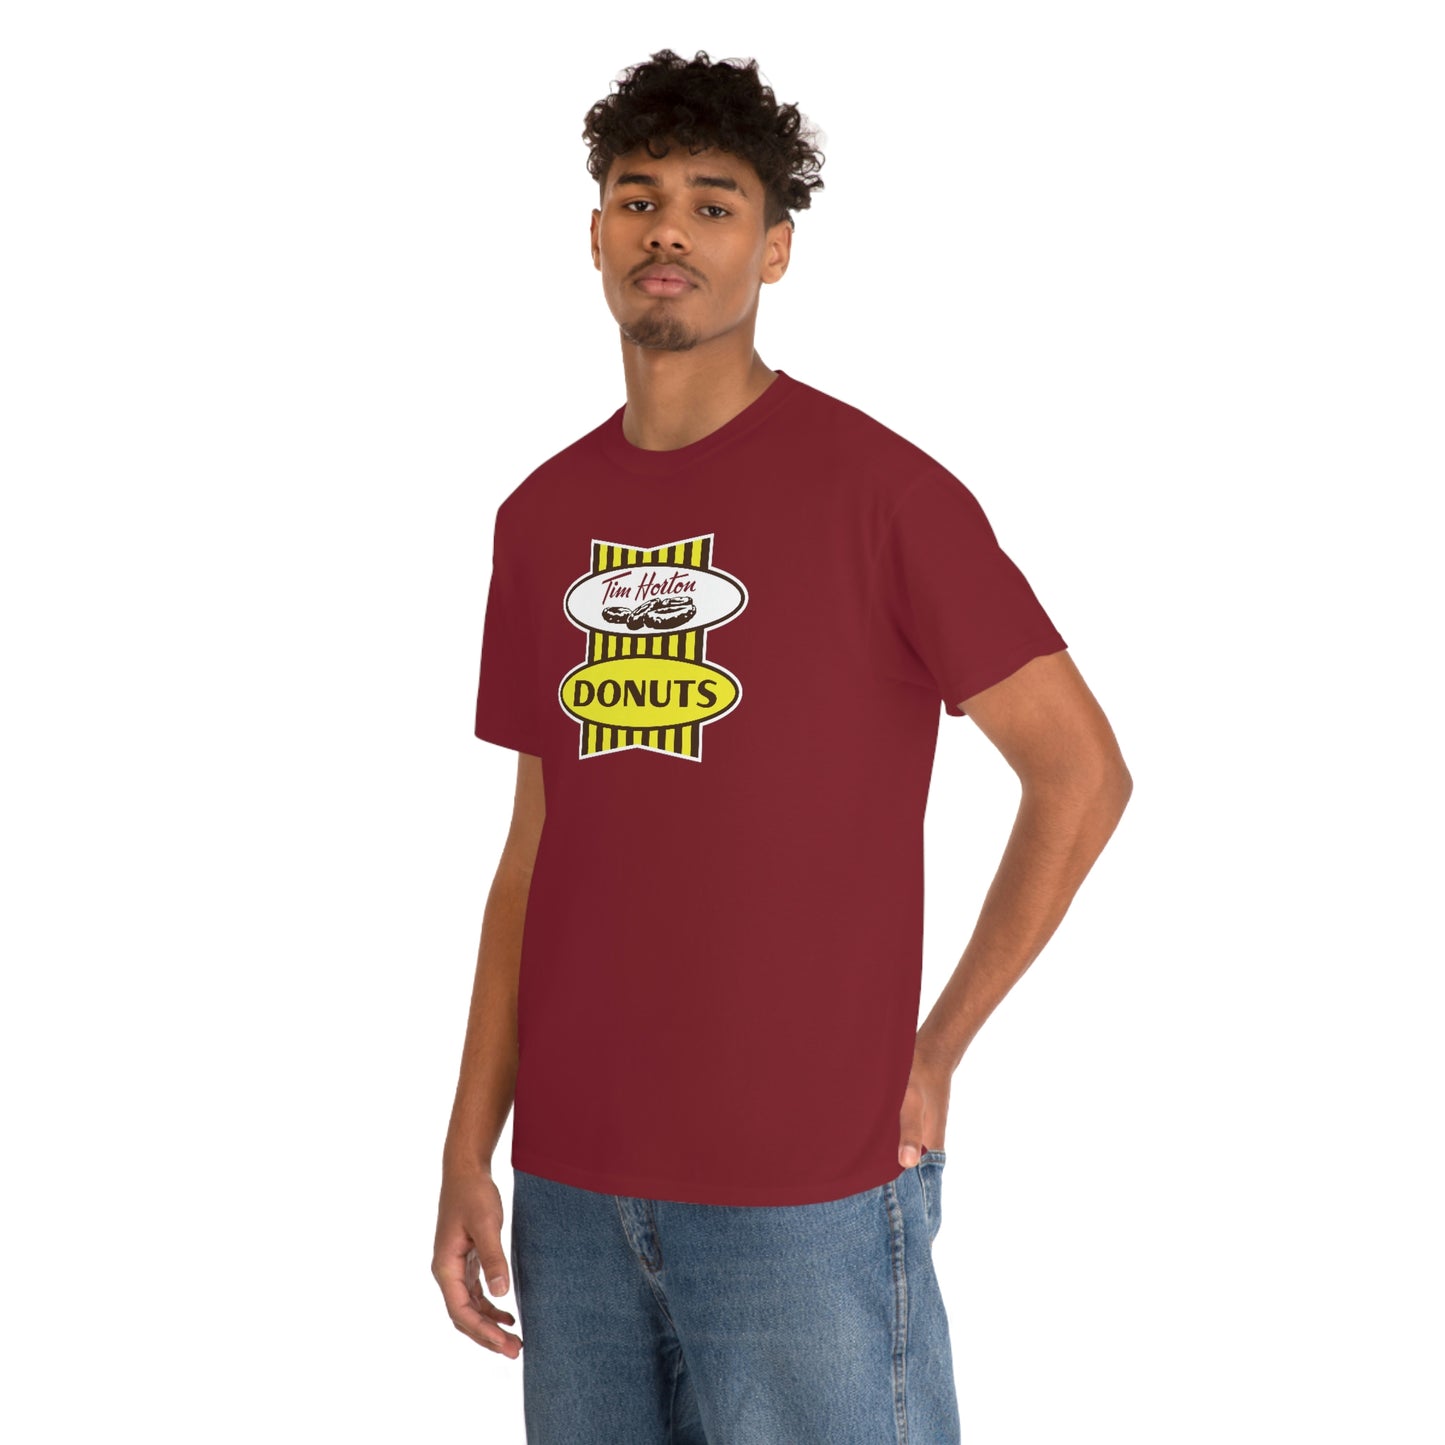 Tim Hortons T-Shirt